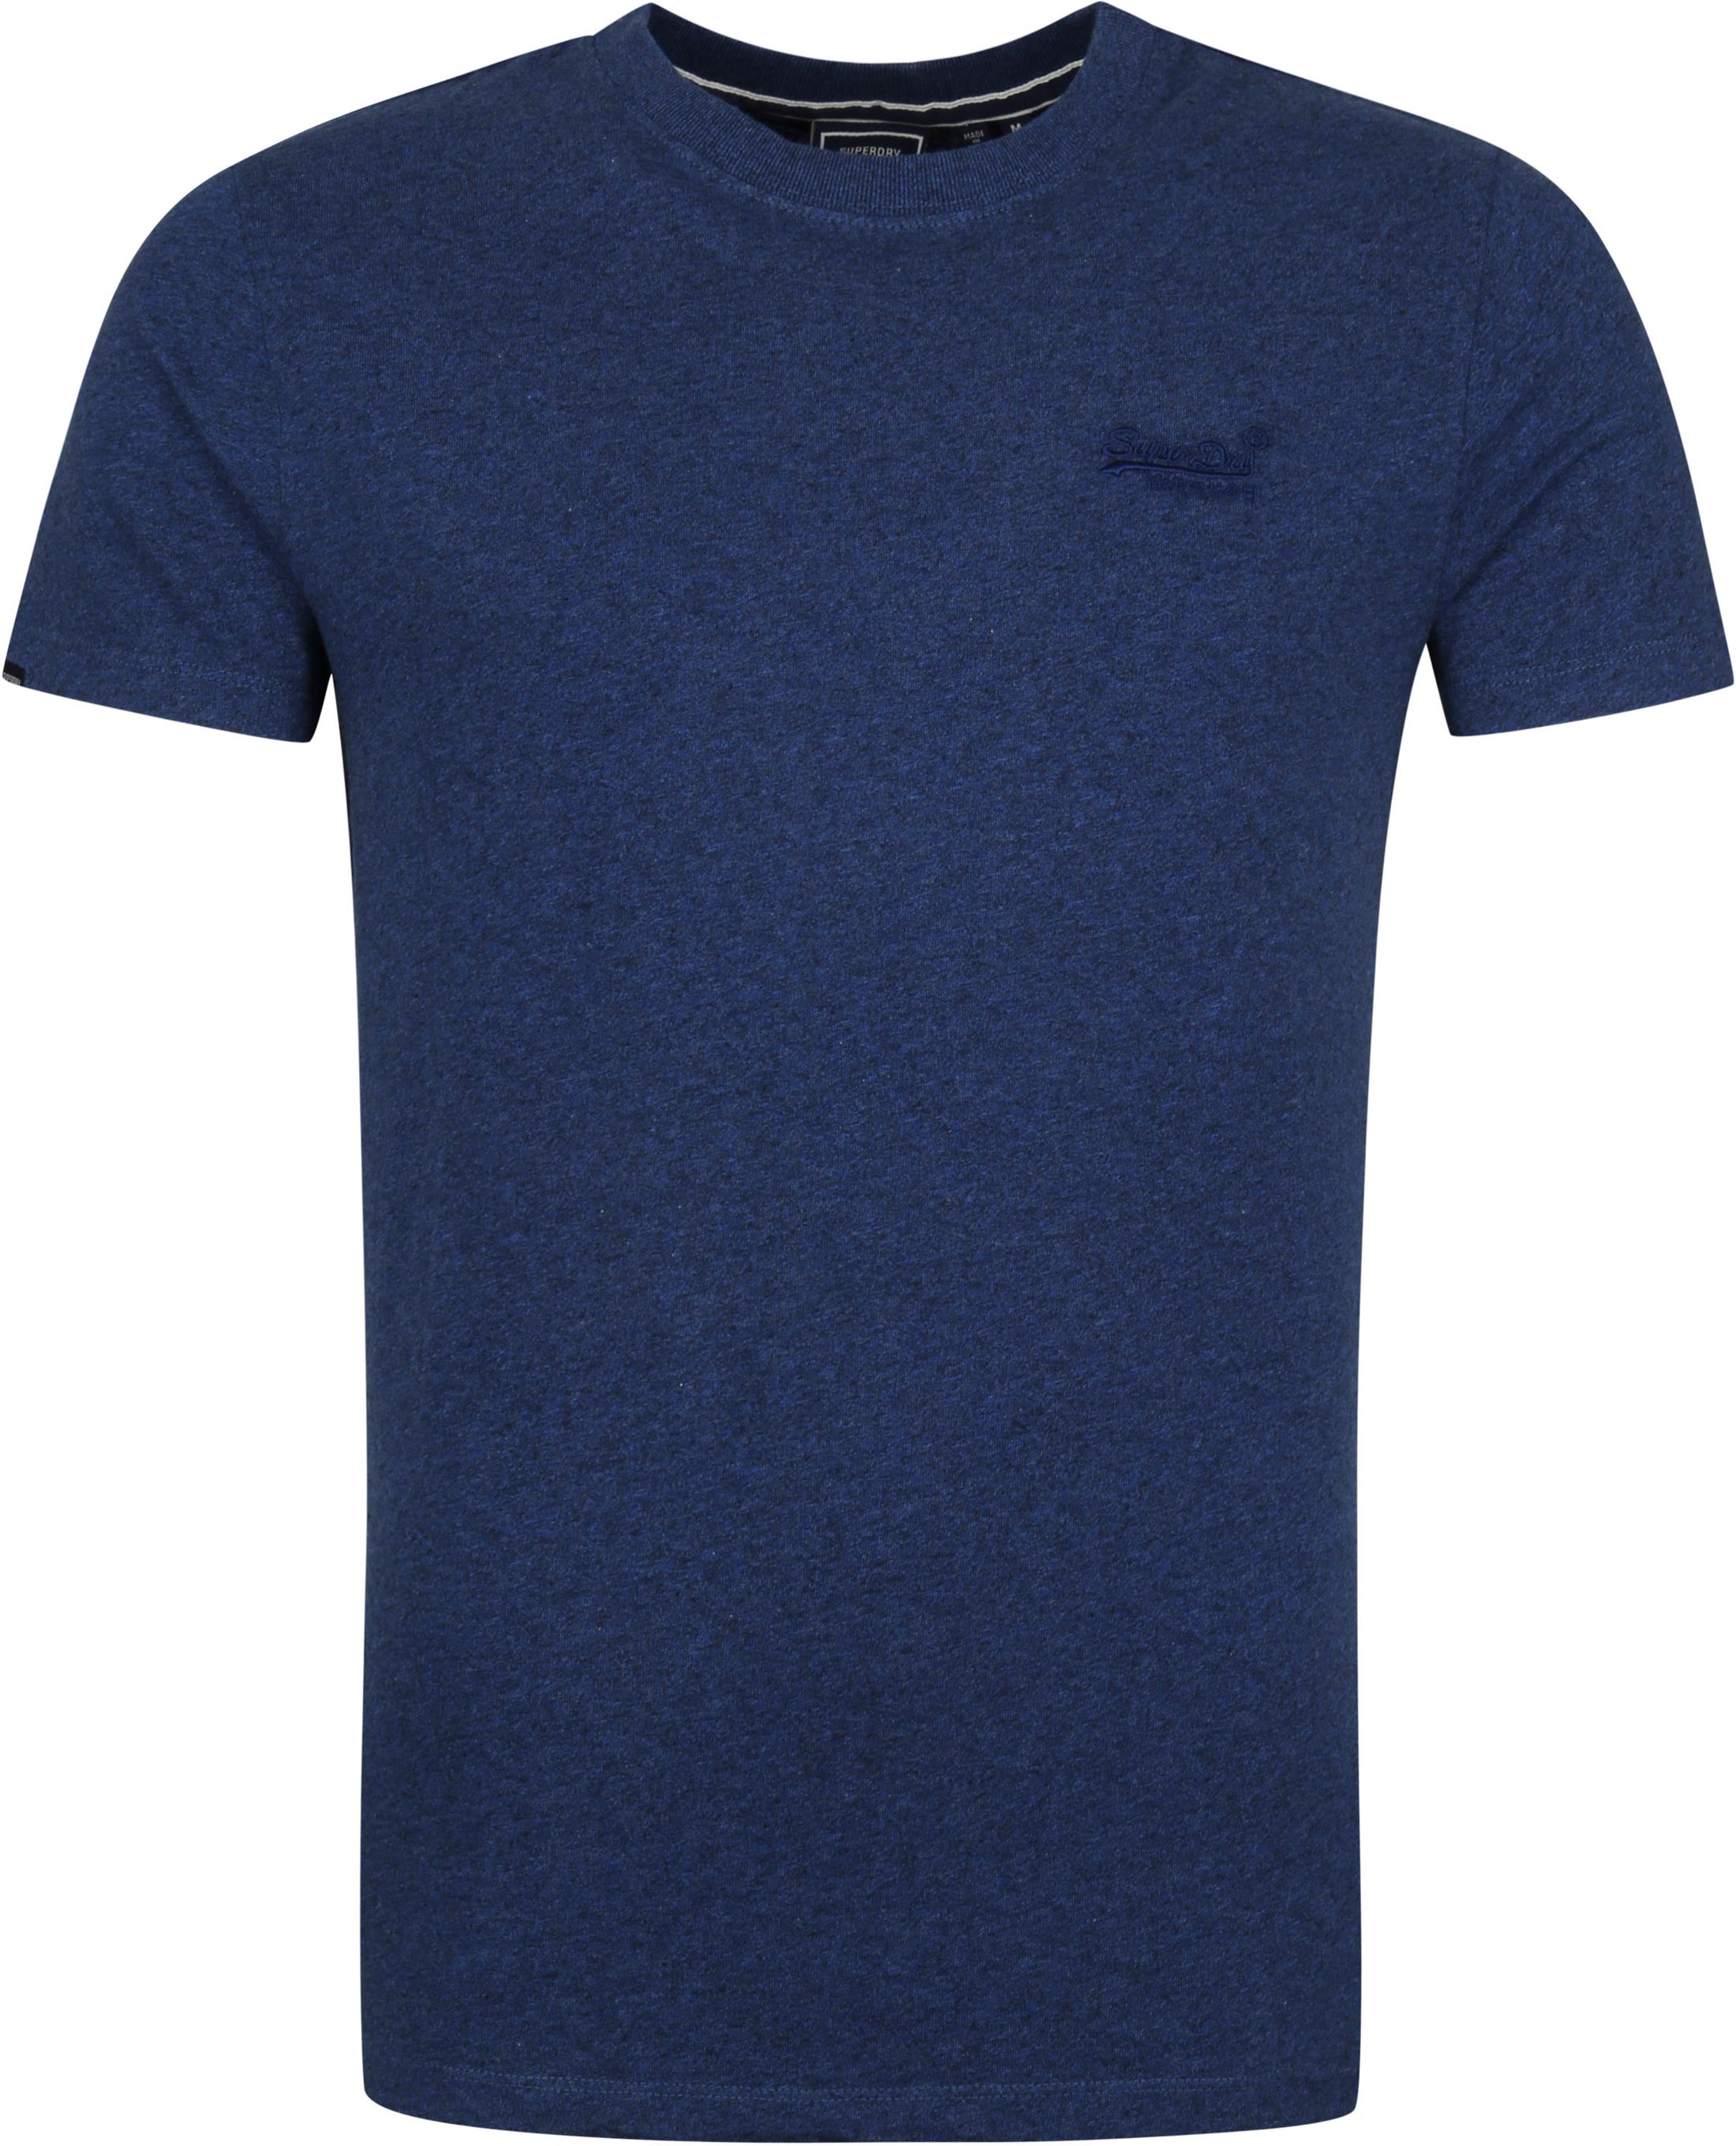 Superdry Classic T Shirt Darkblue Navy Dark Blue Blue size 3XL